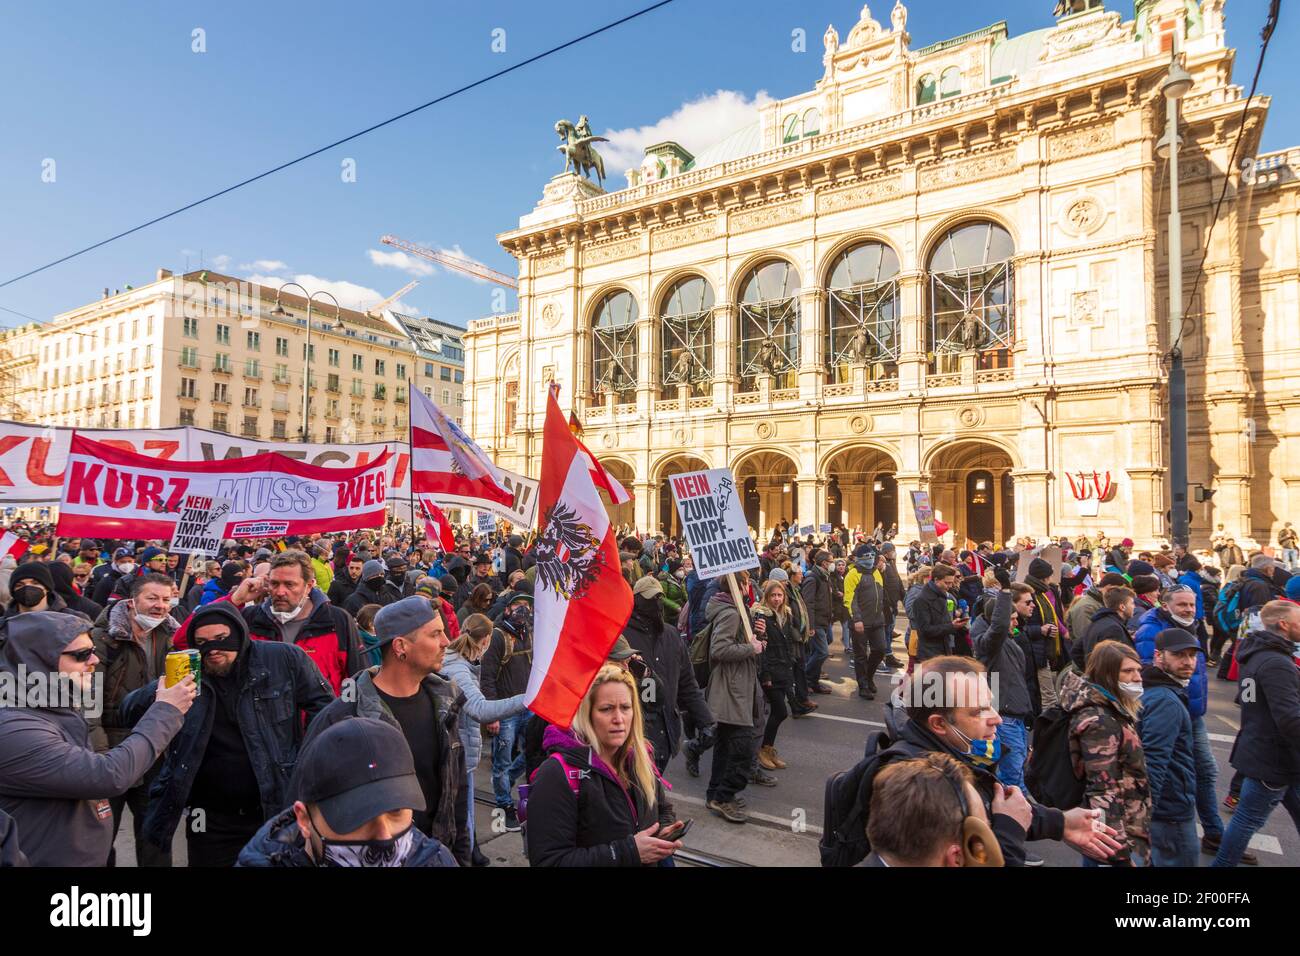 Wien, Vienna: Corona protest demonstration in front of opera Staatsoper, opponents of the corona measures march, banner 'Kurz muss weg' in 01. Old Tow Stock Photo